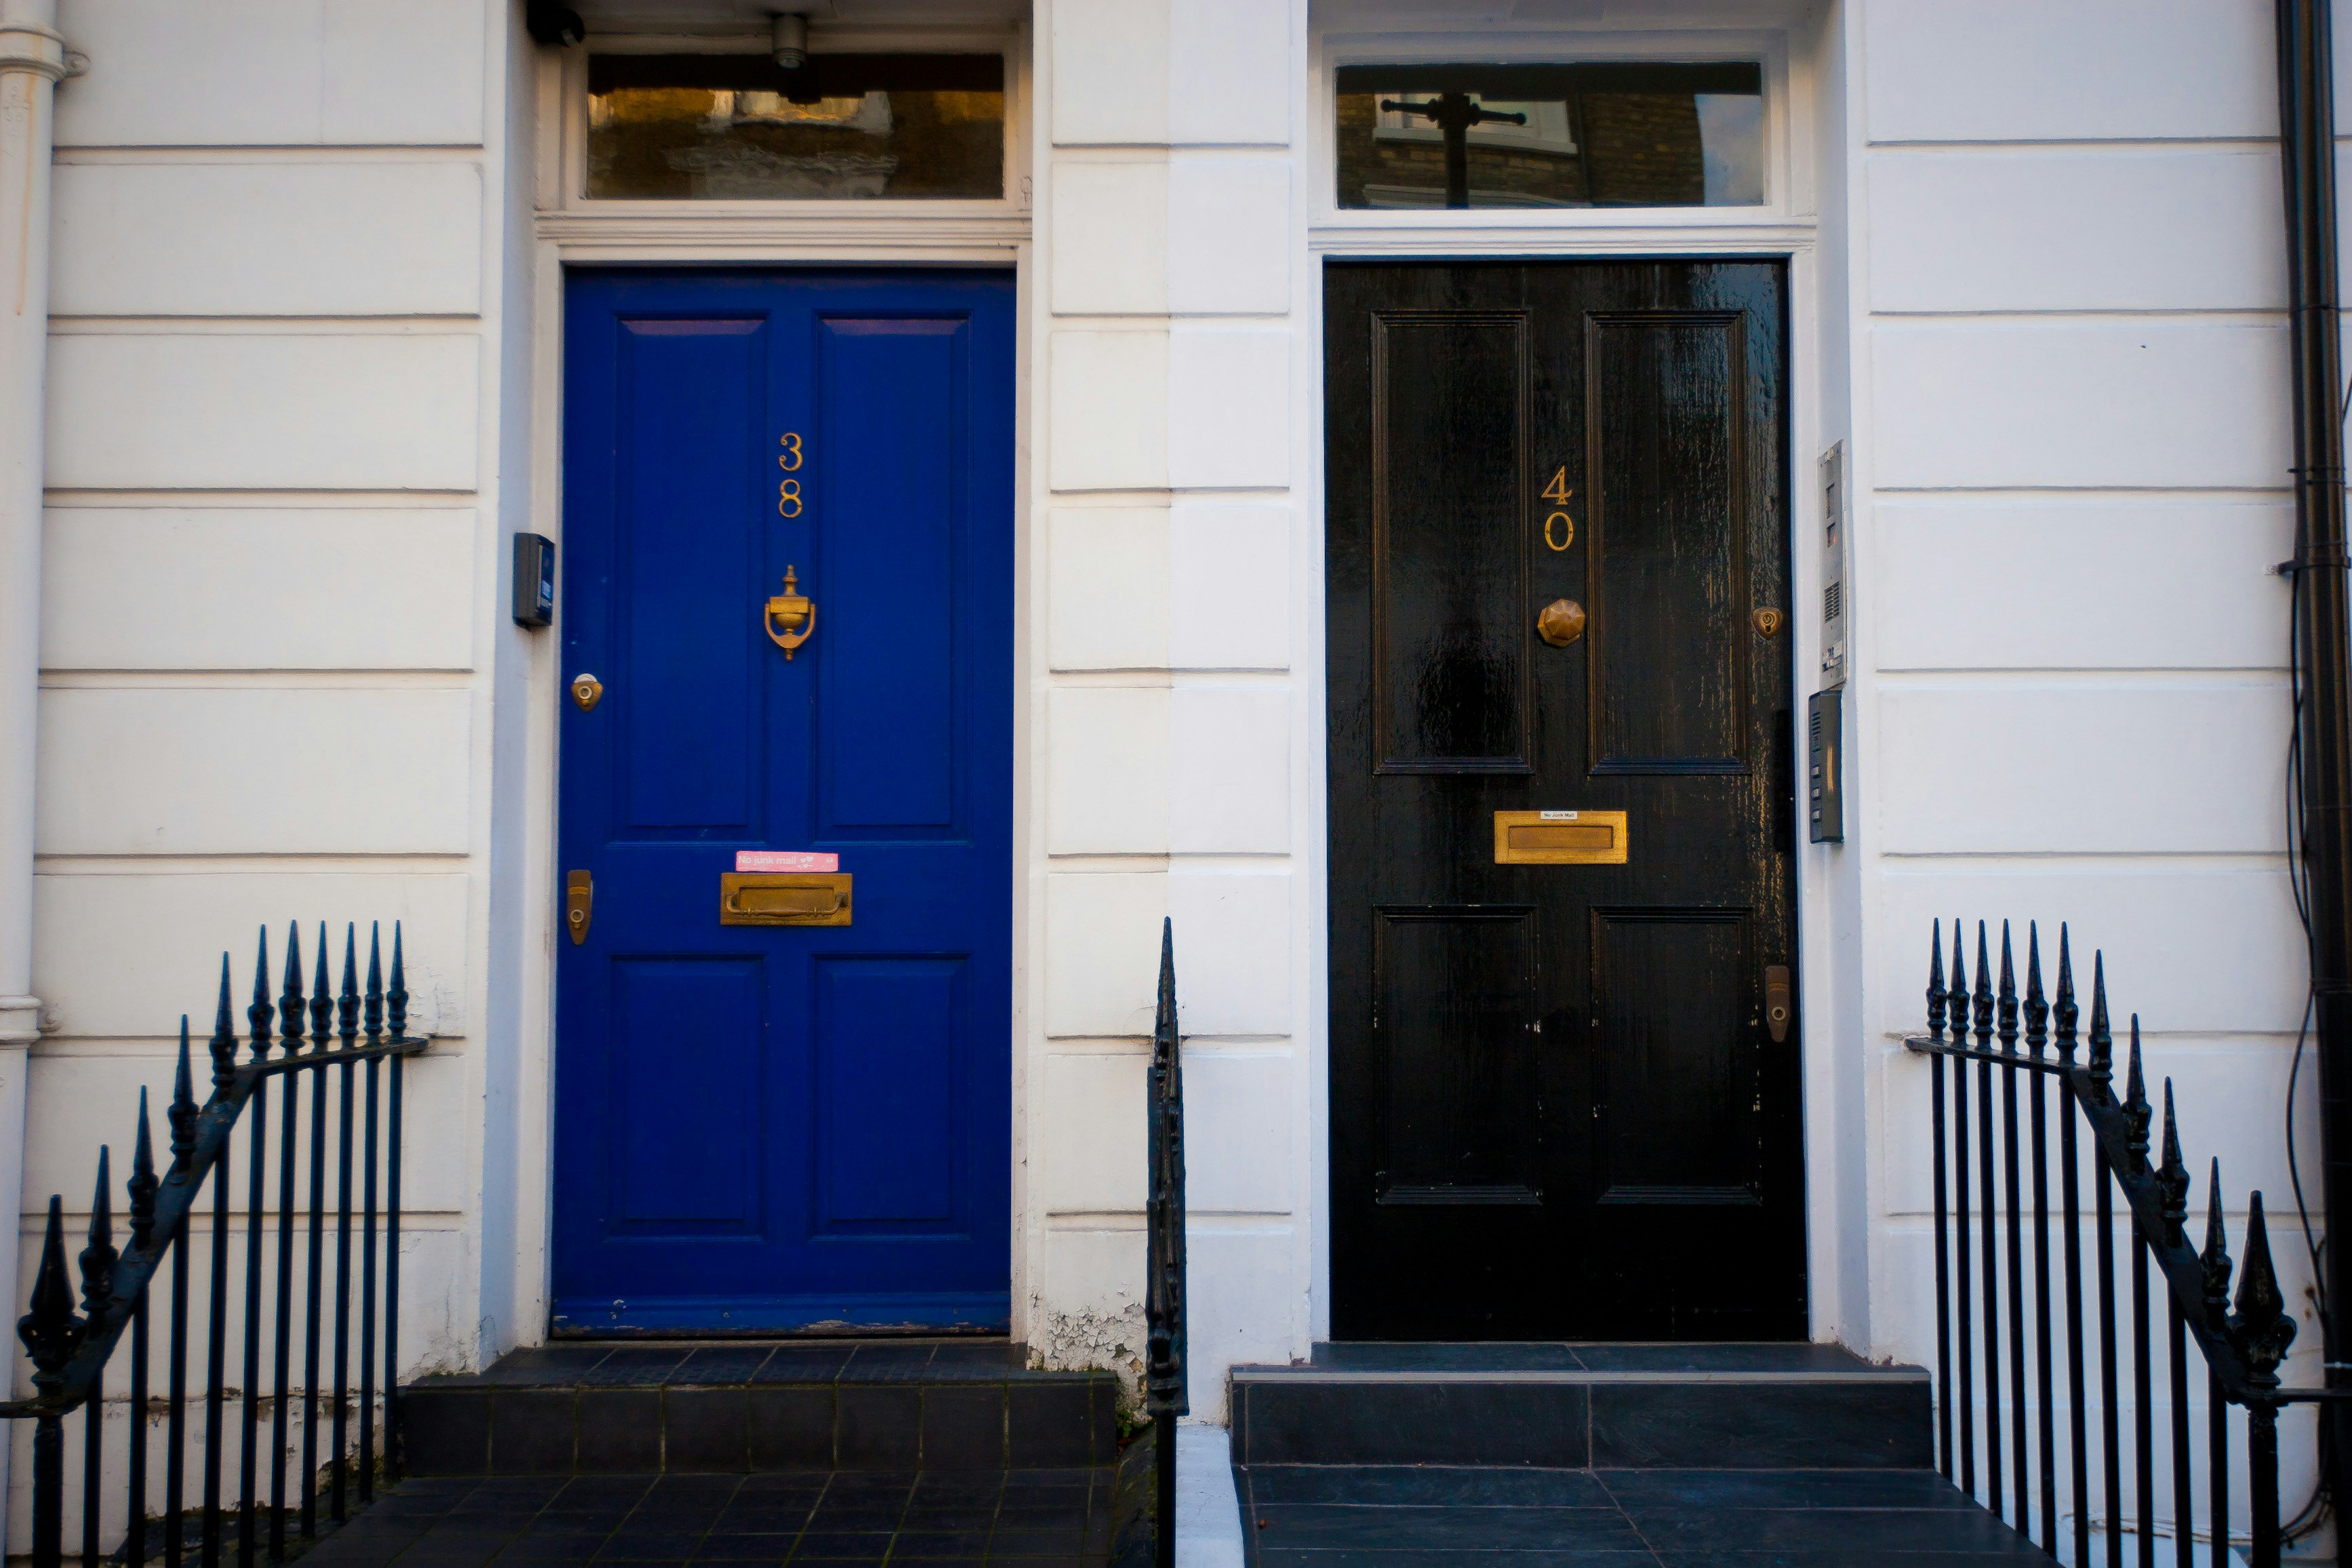 Colourful doors in Chelsea, London